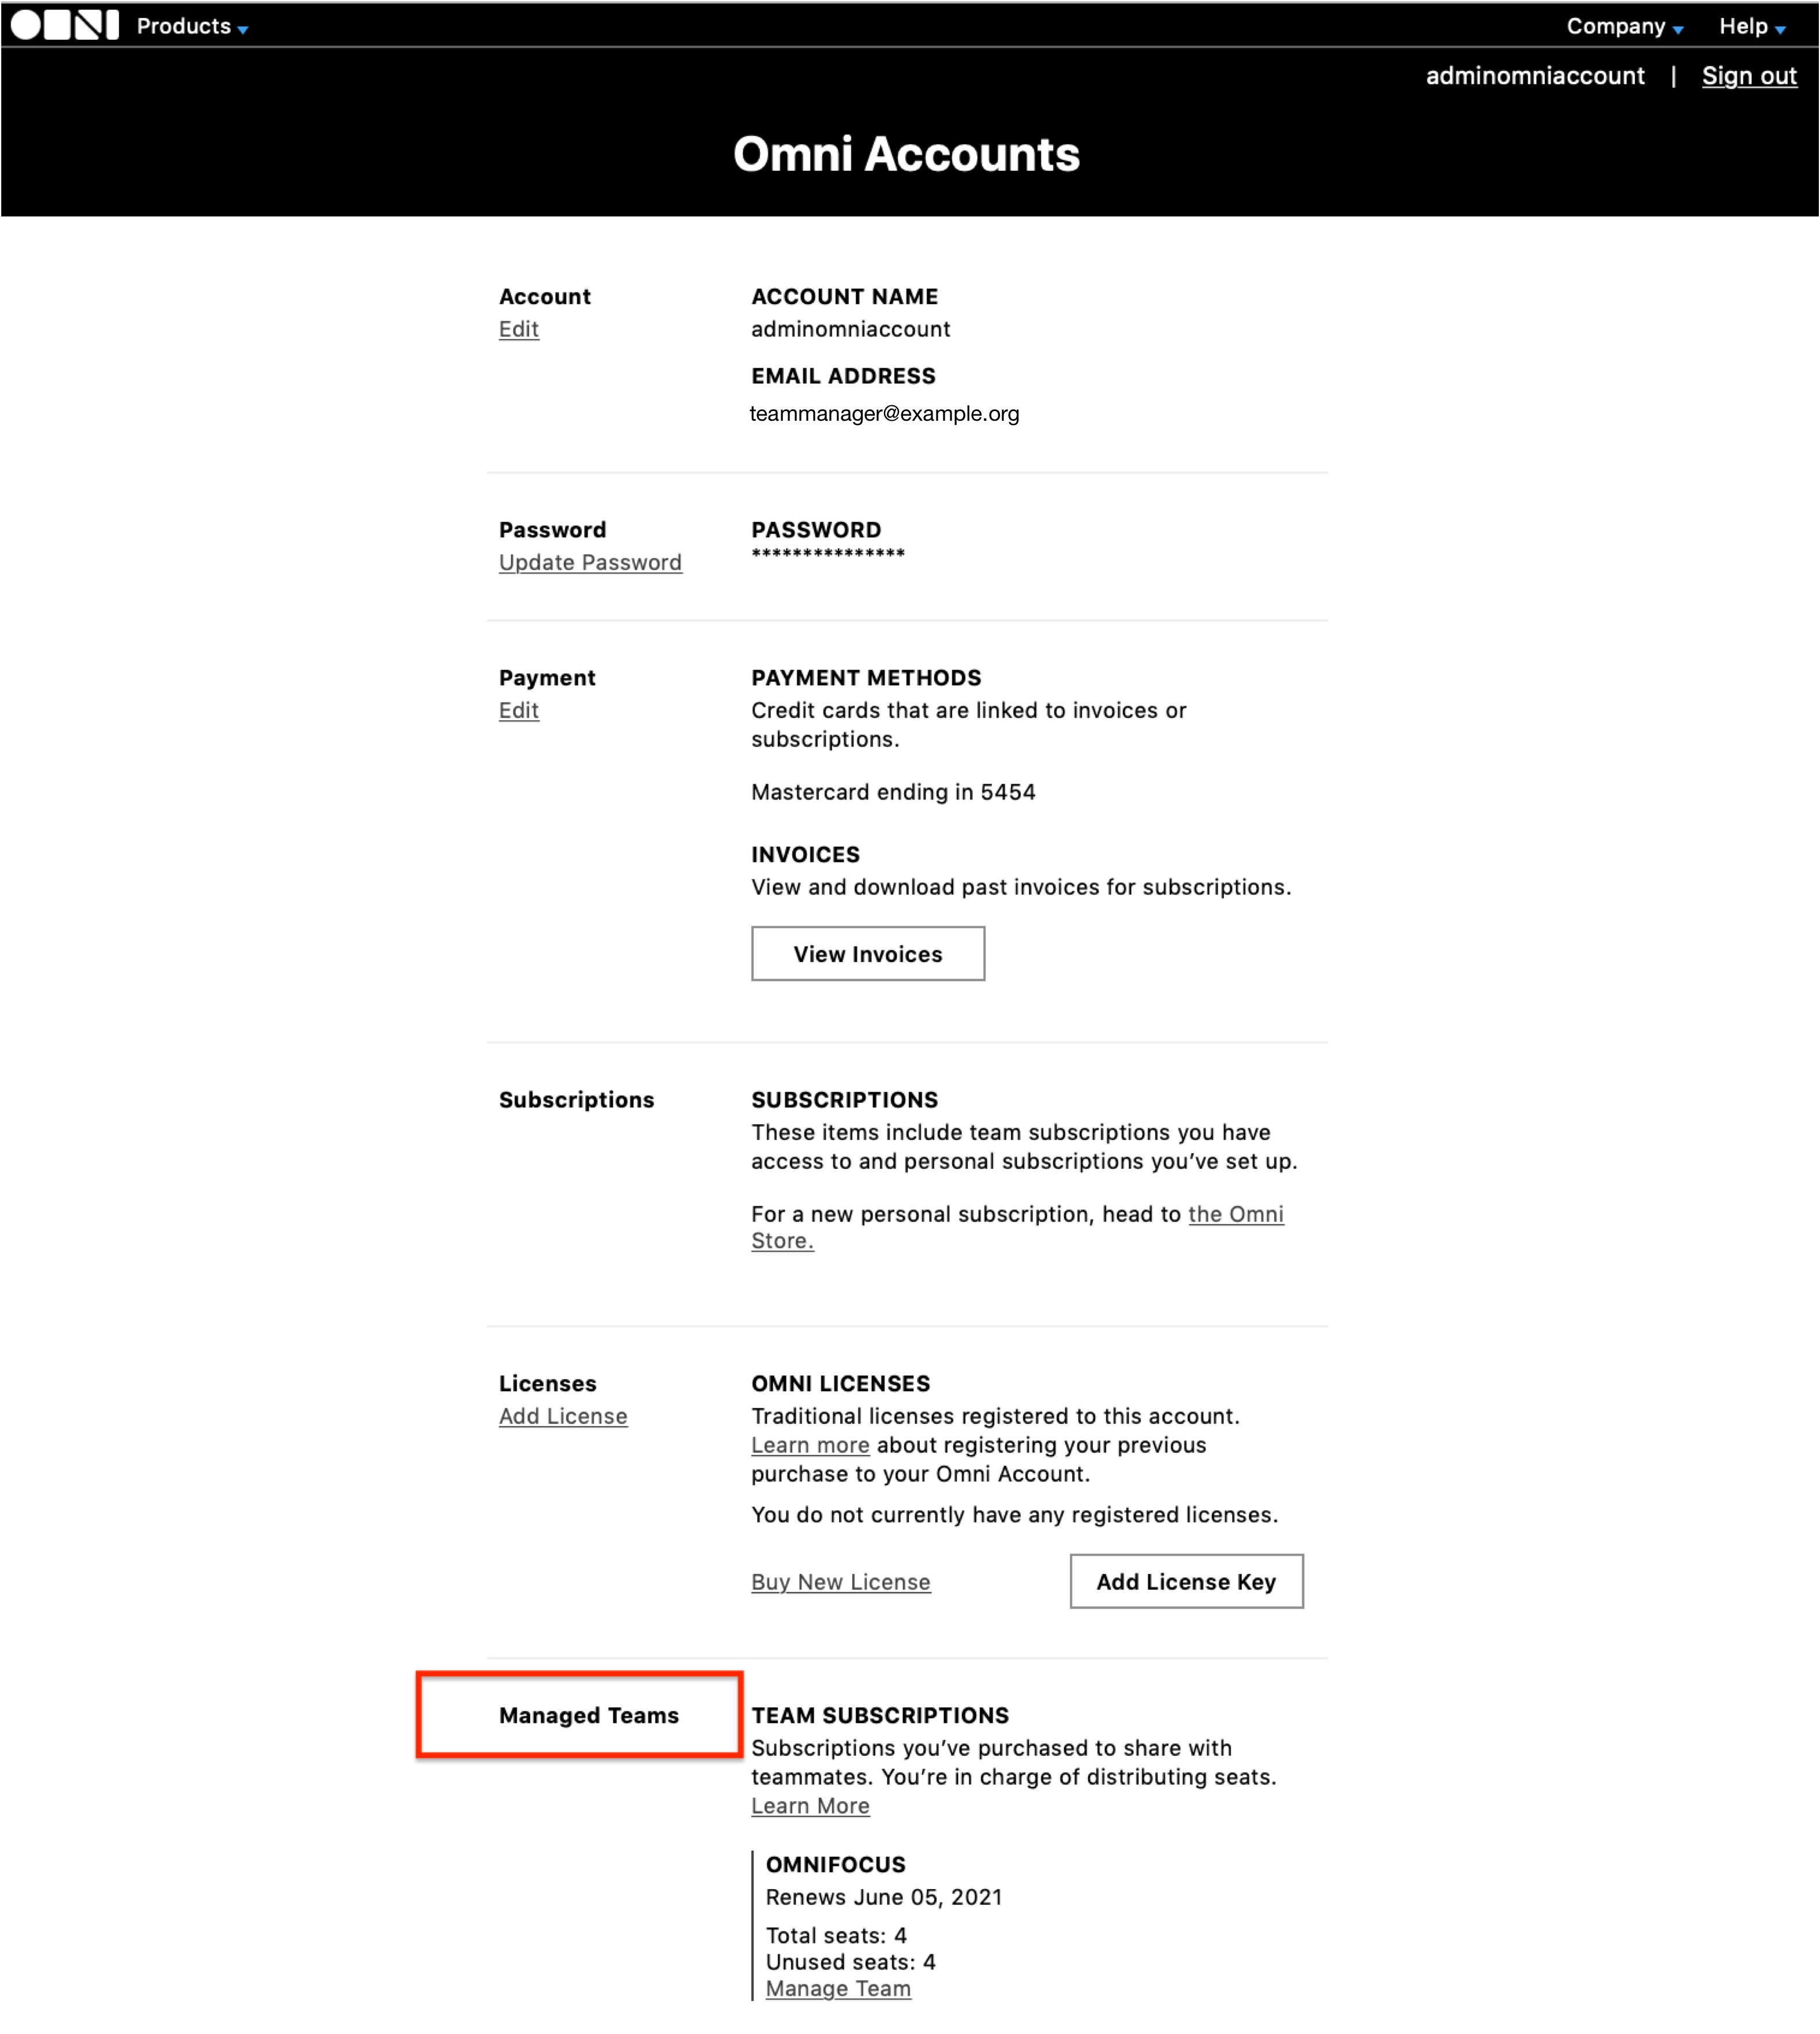 "Manage Teams" Option in Omni Accounts